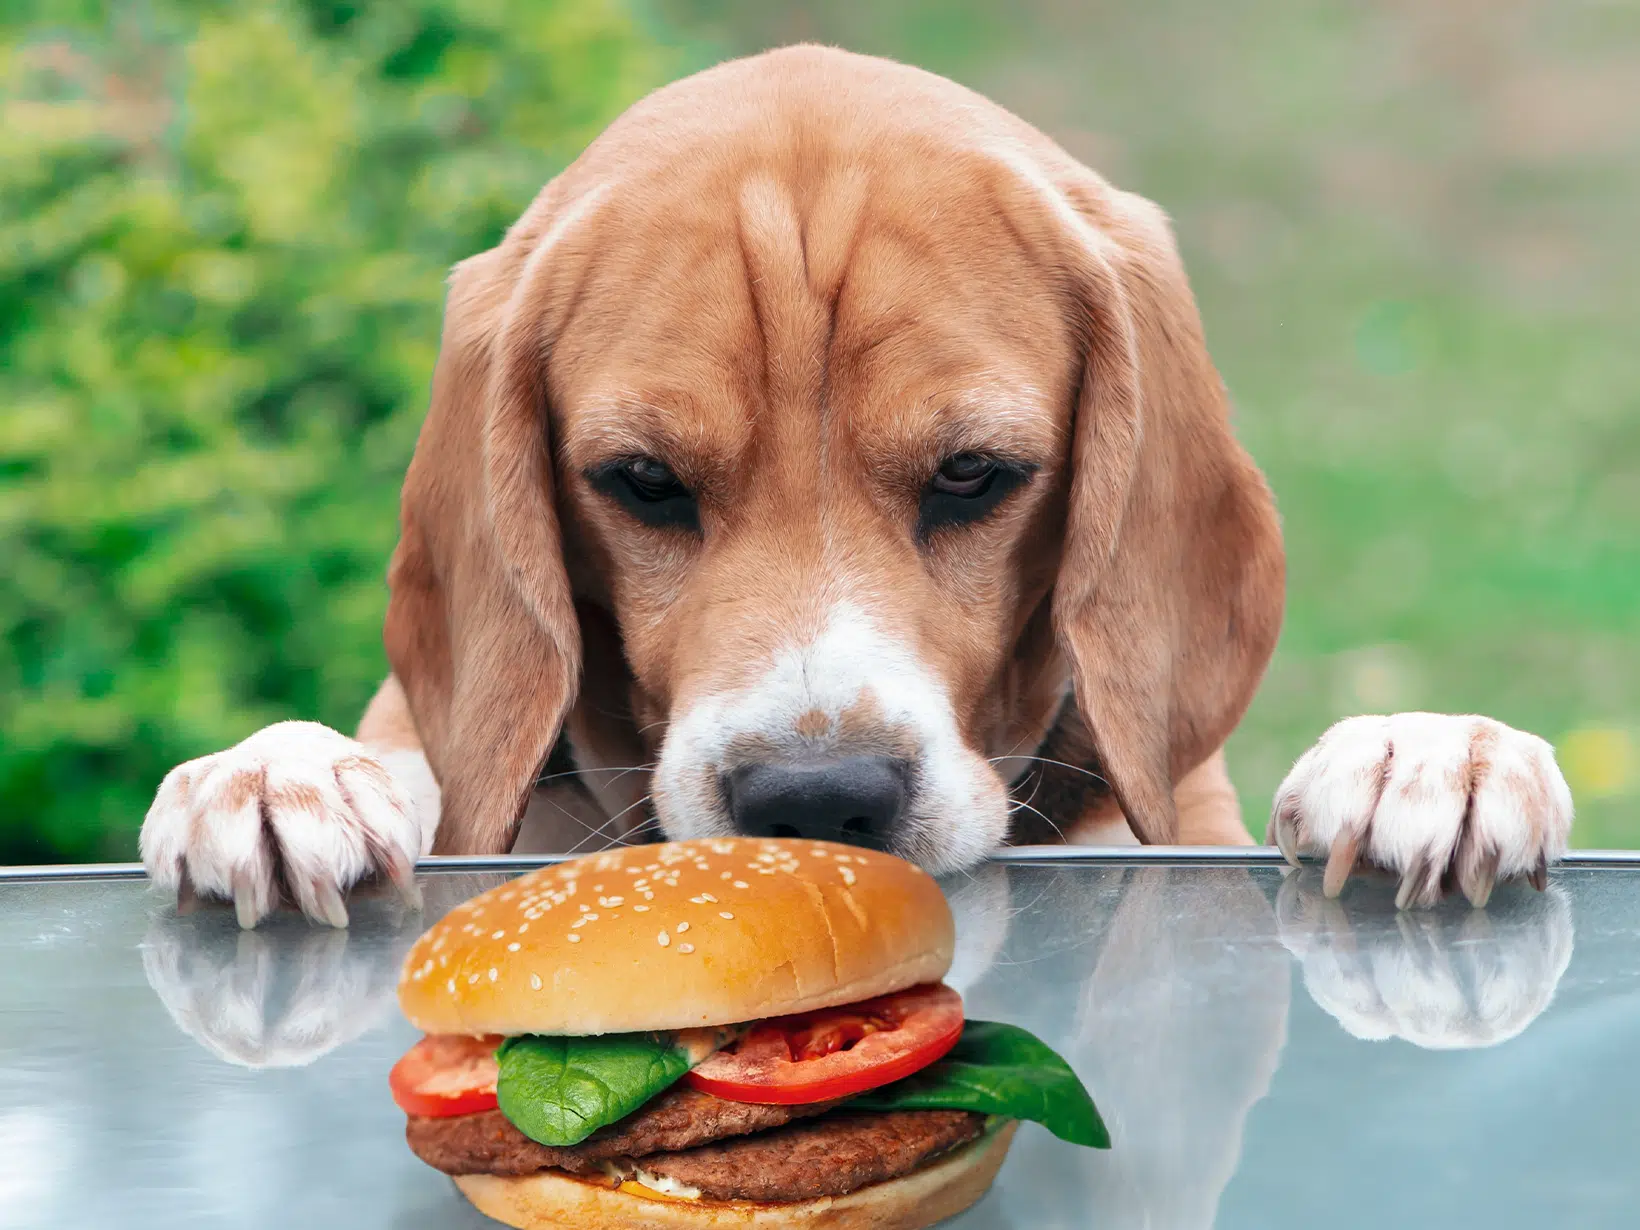 Mag een hond hamburger eten?